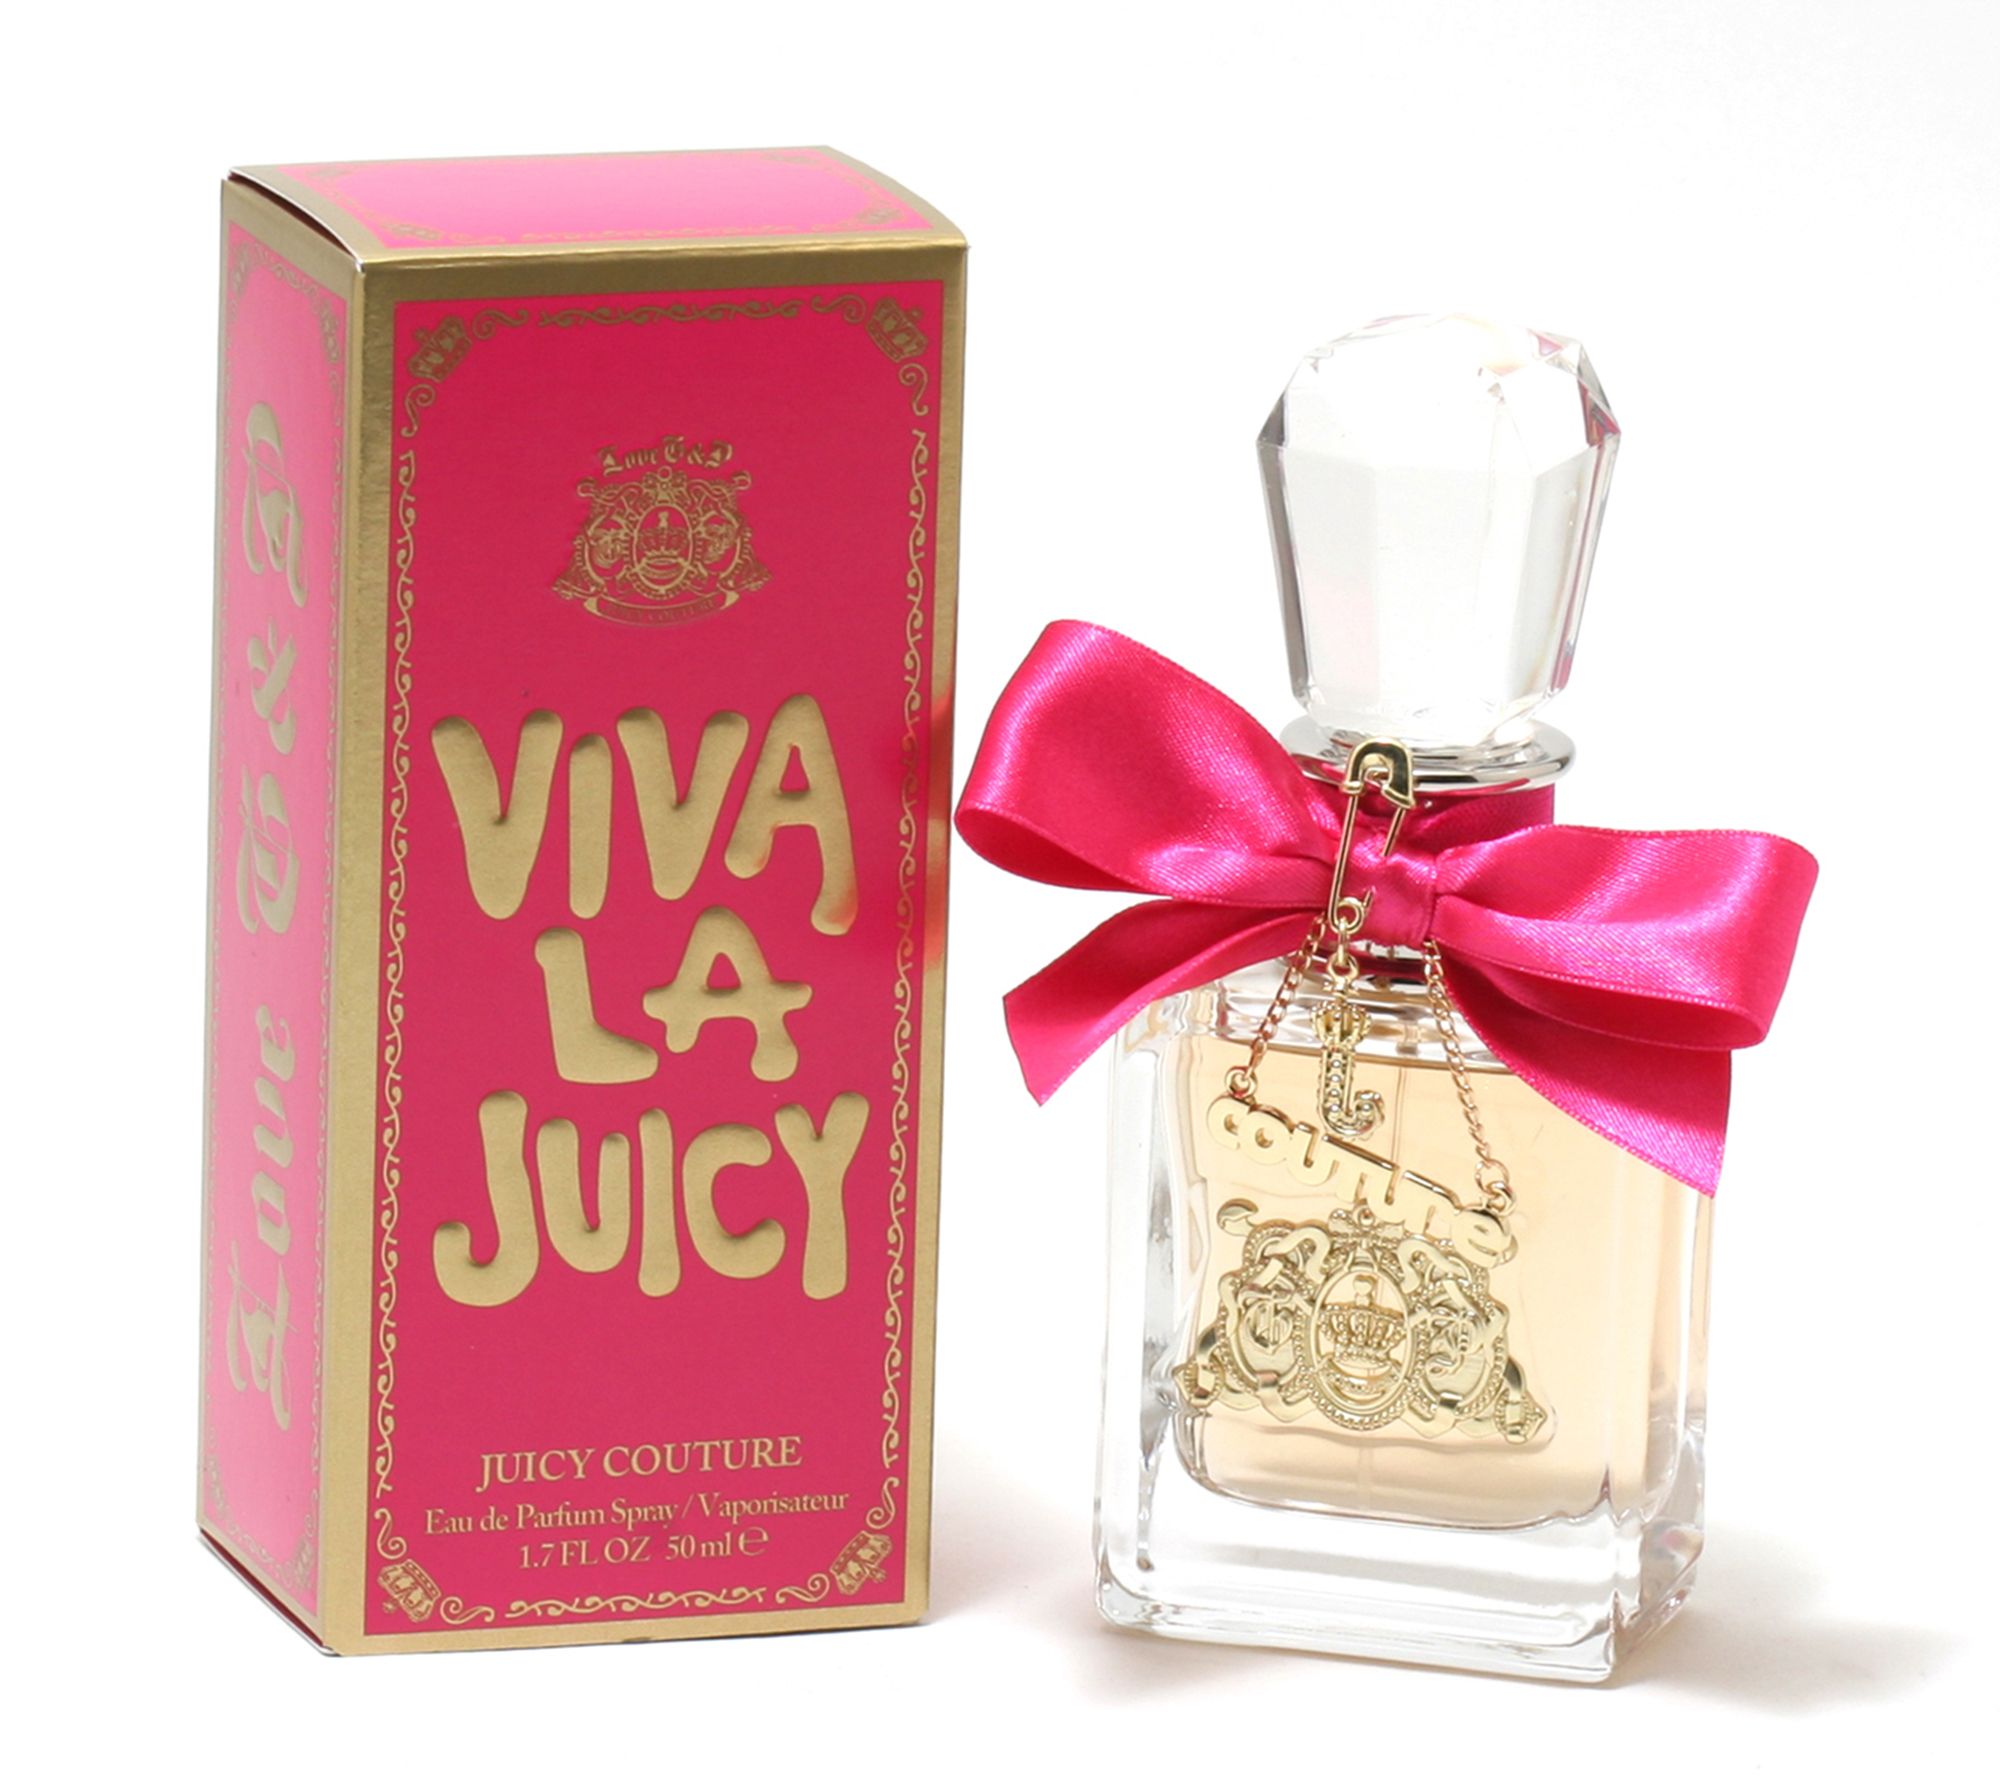 Juicy Couture Viva La Juicy Eau de Parfum Spray - 1 oz bottle